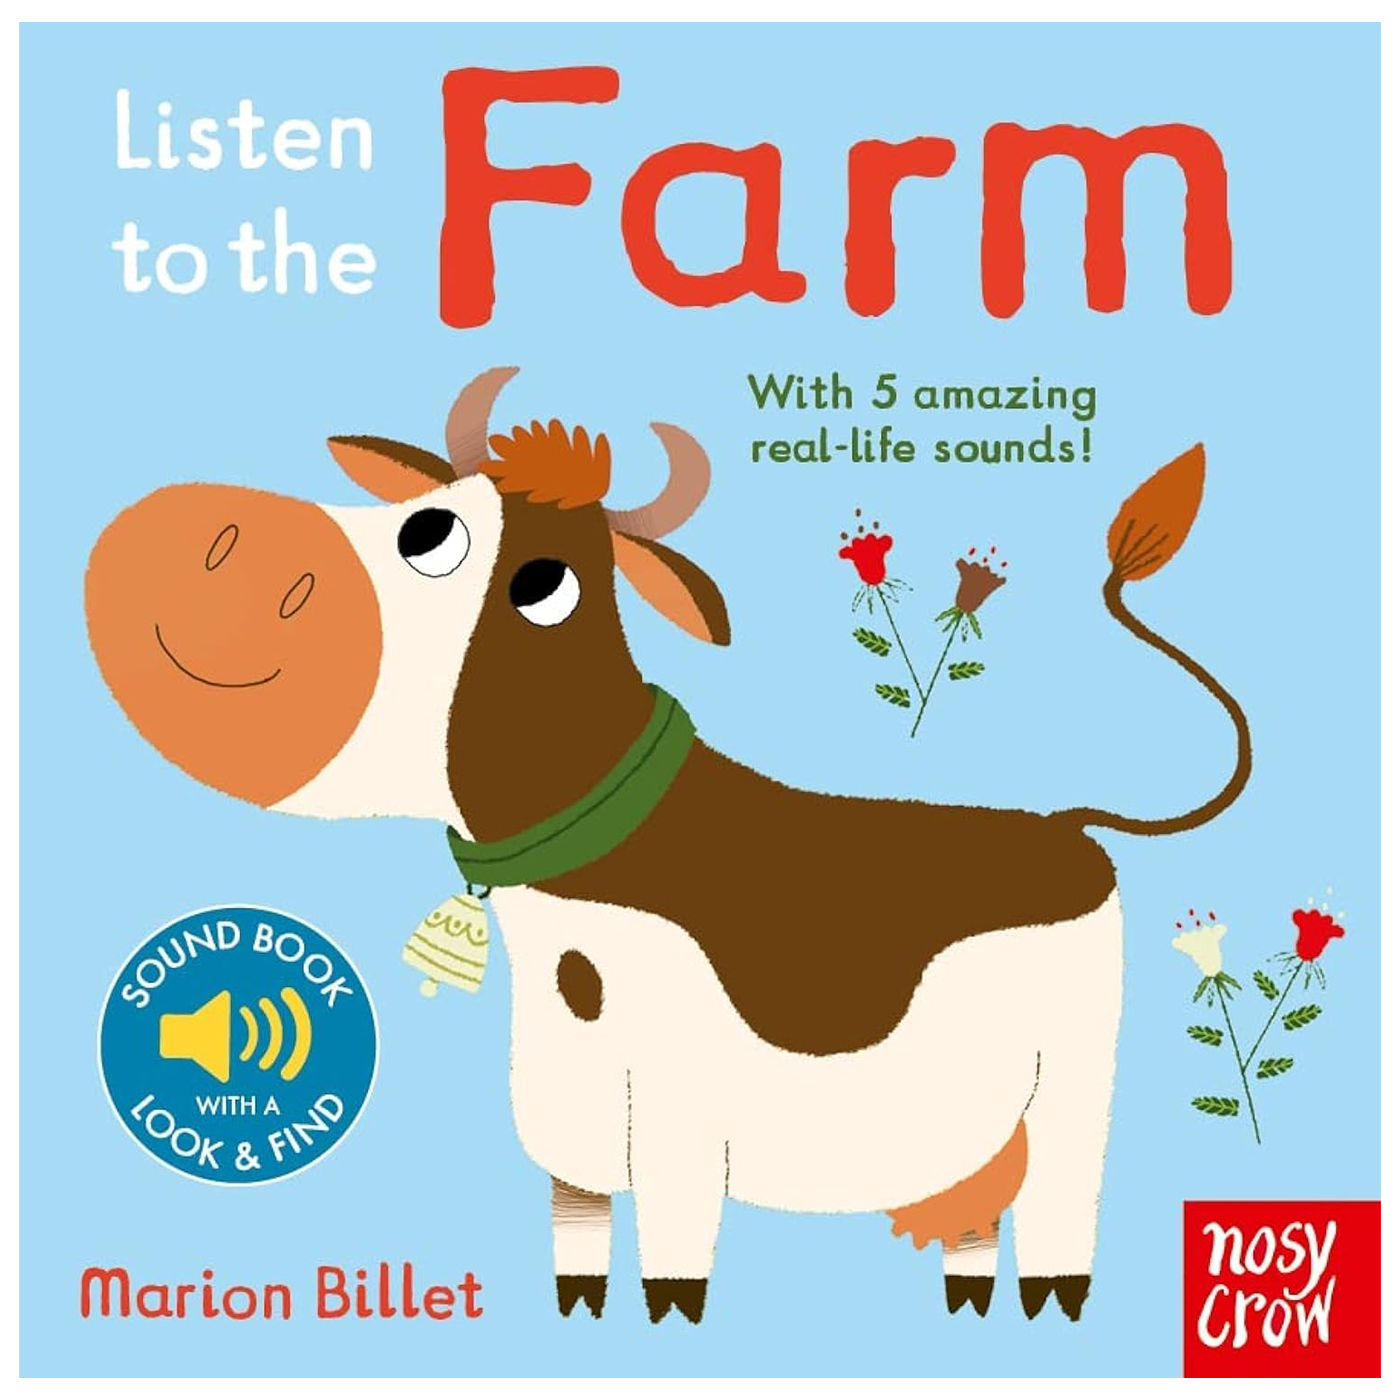  Listen to the: Farm